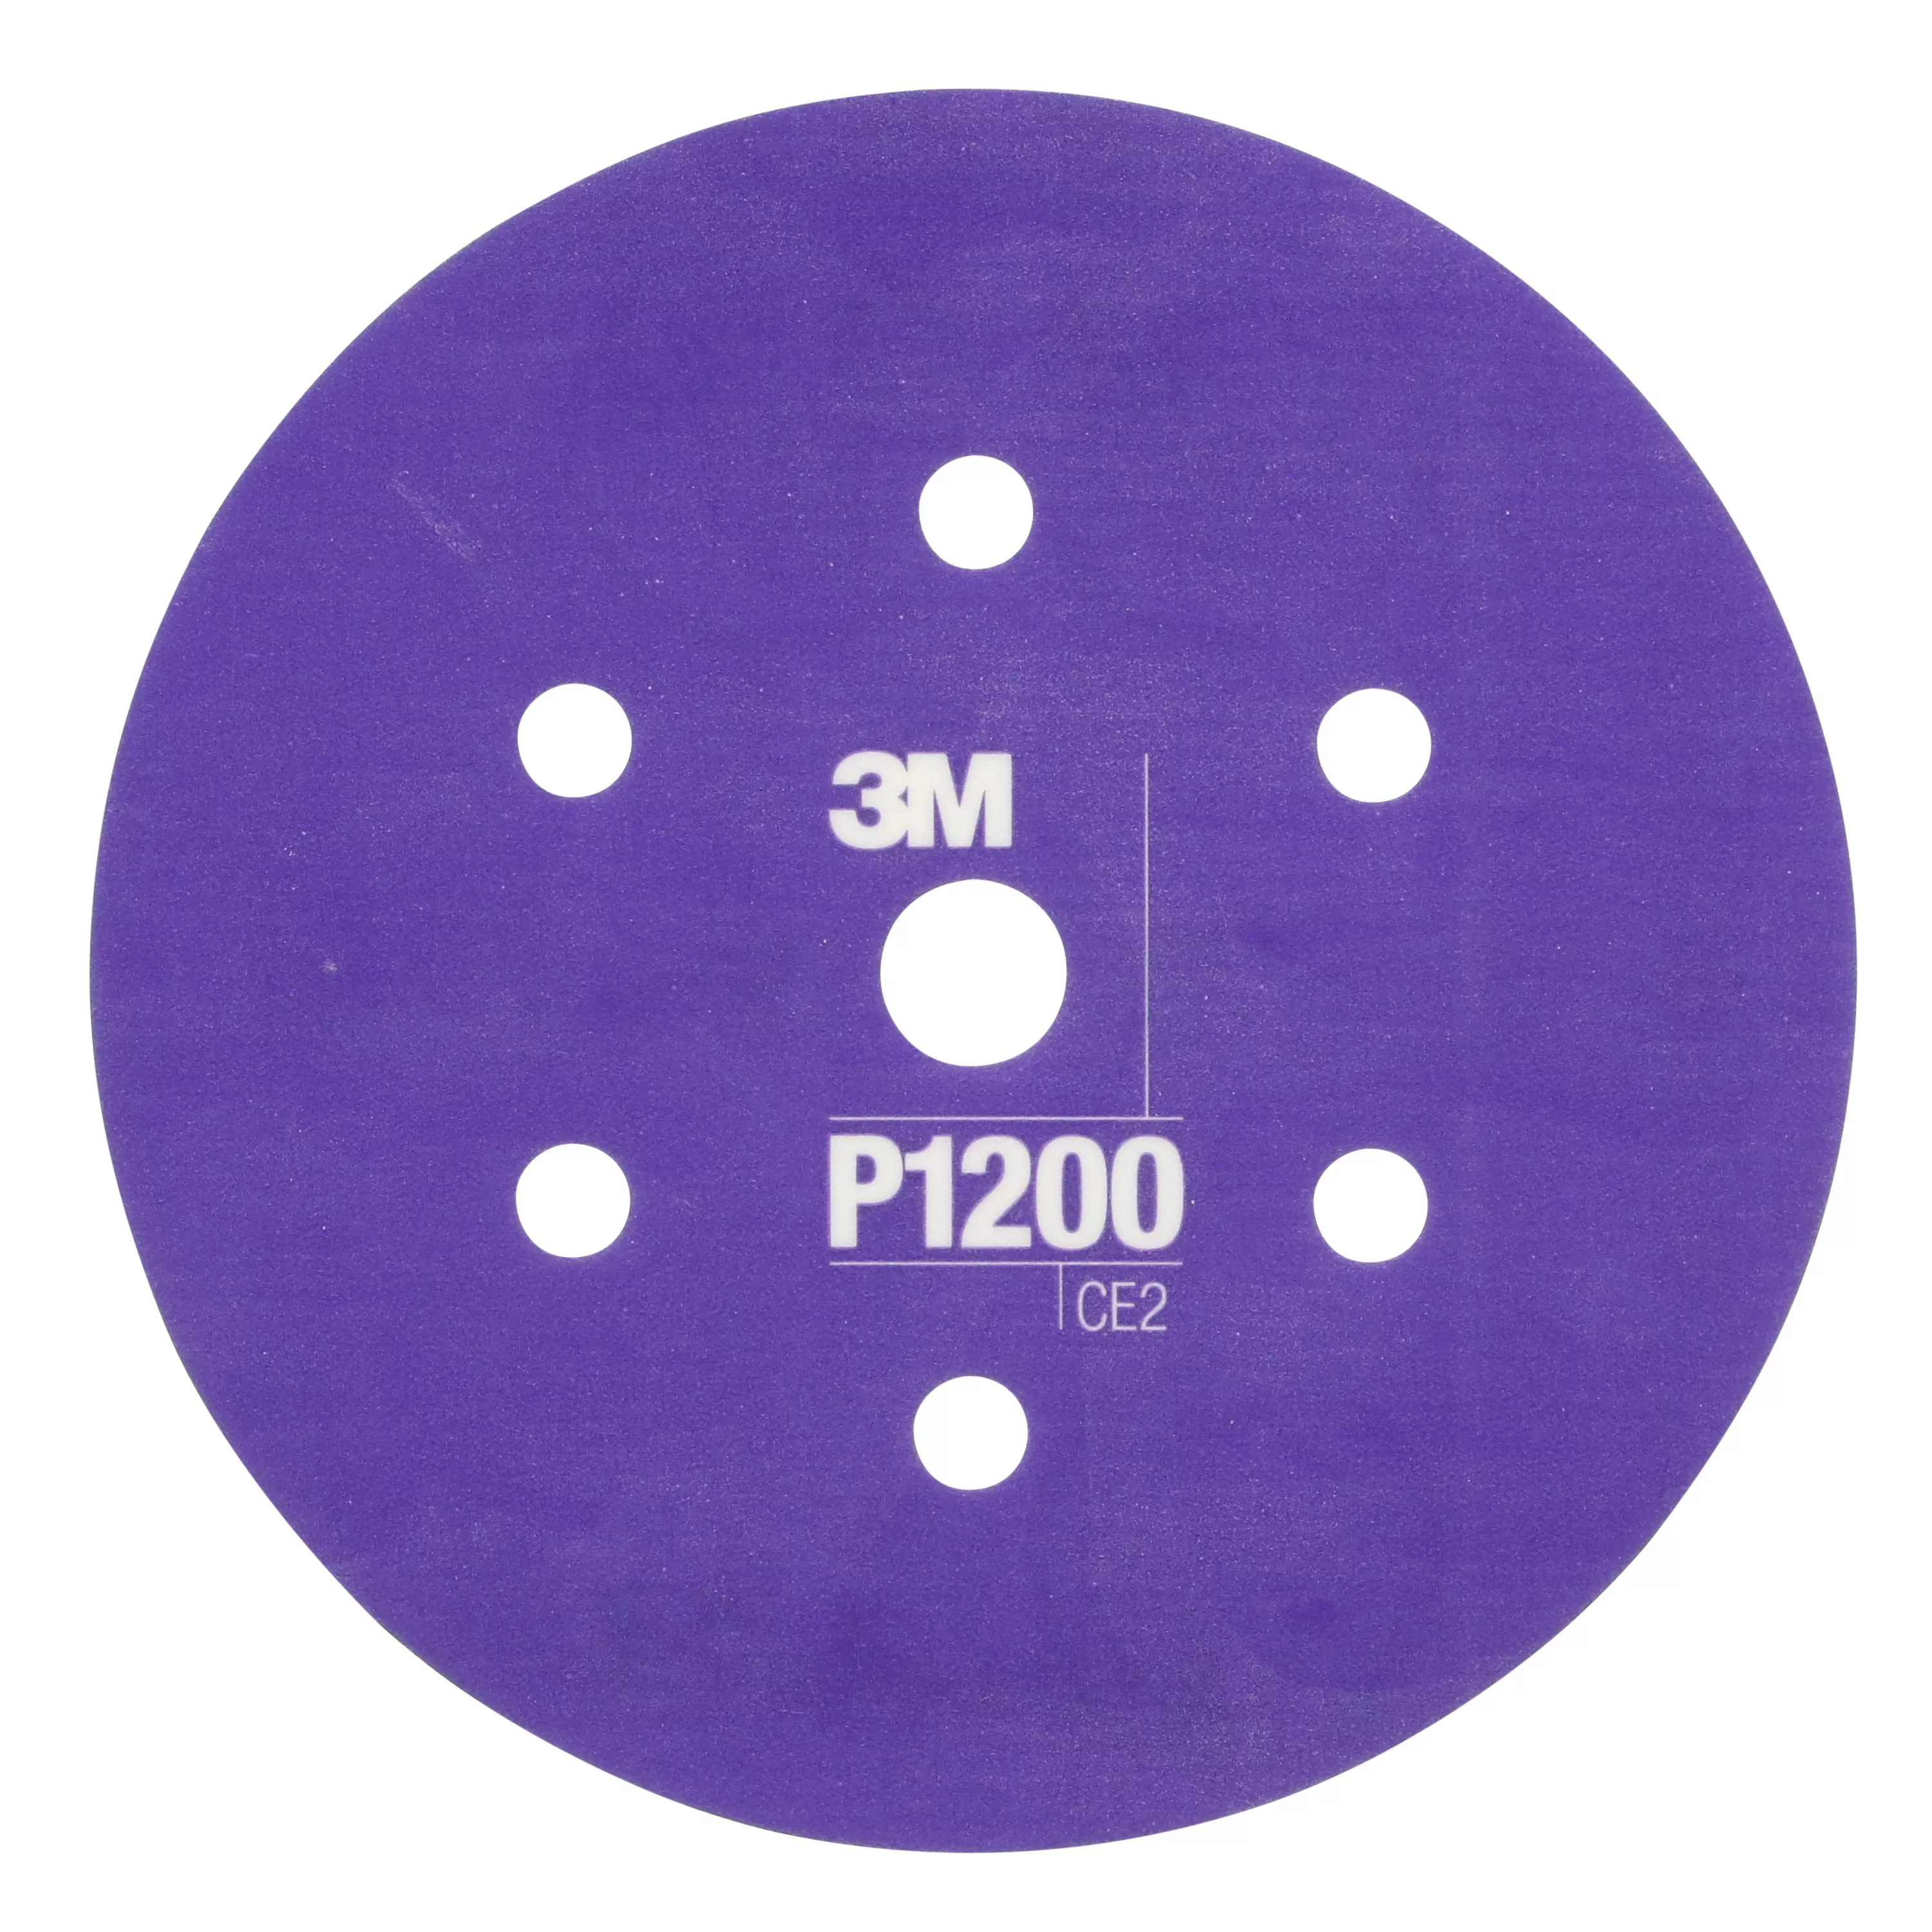 SKU 7000120197 | 3M™ Hookit™ Flexible Abrasive Disc 270J